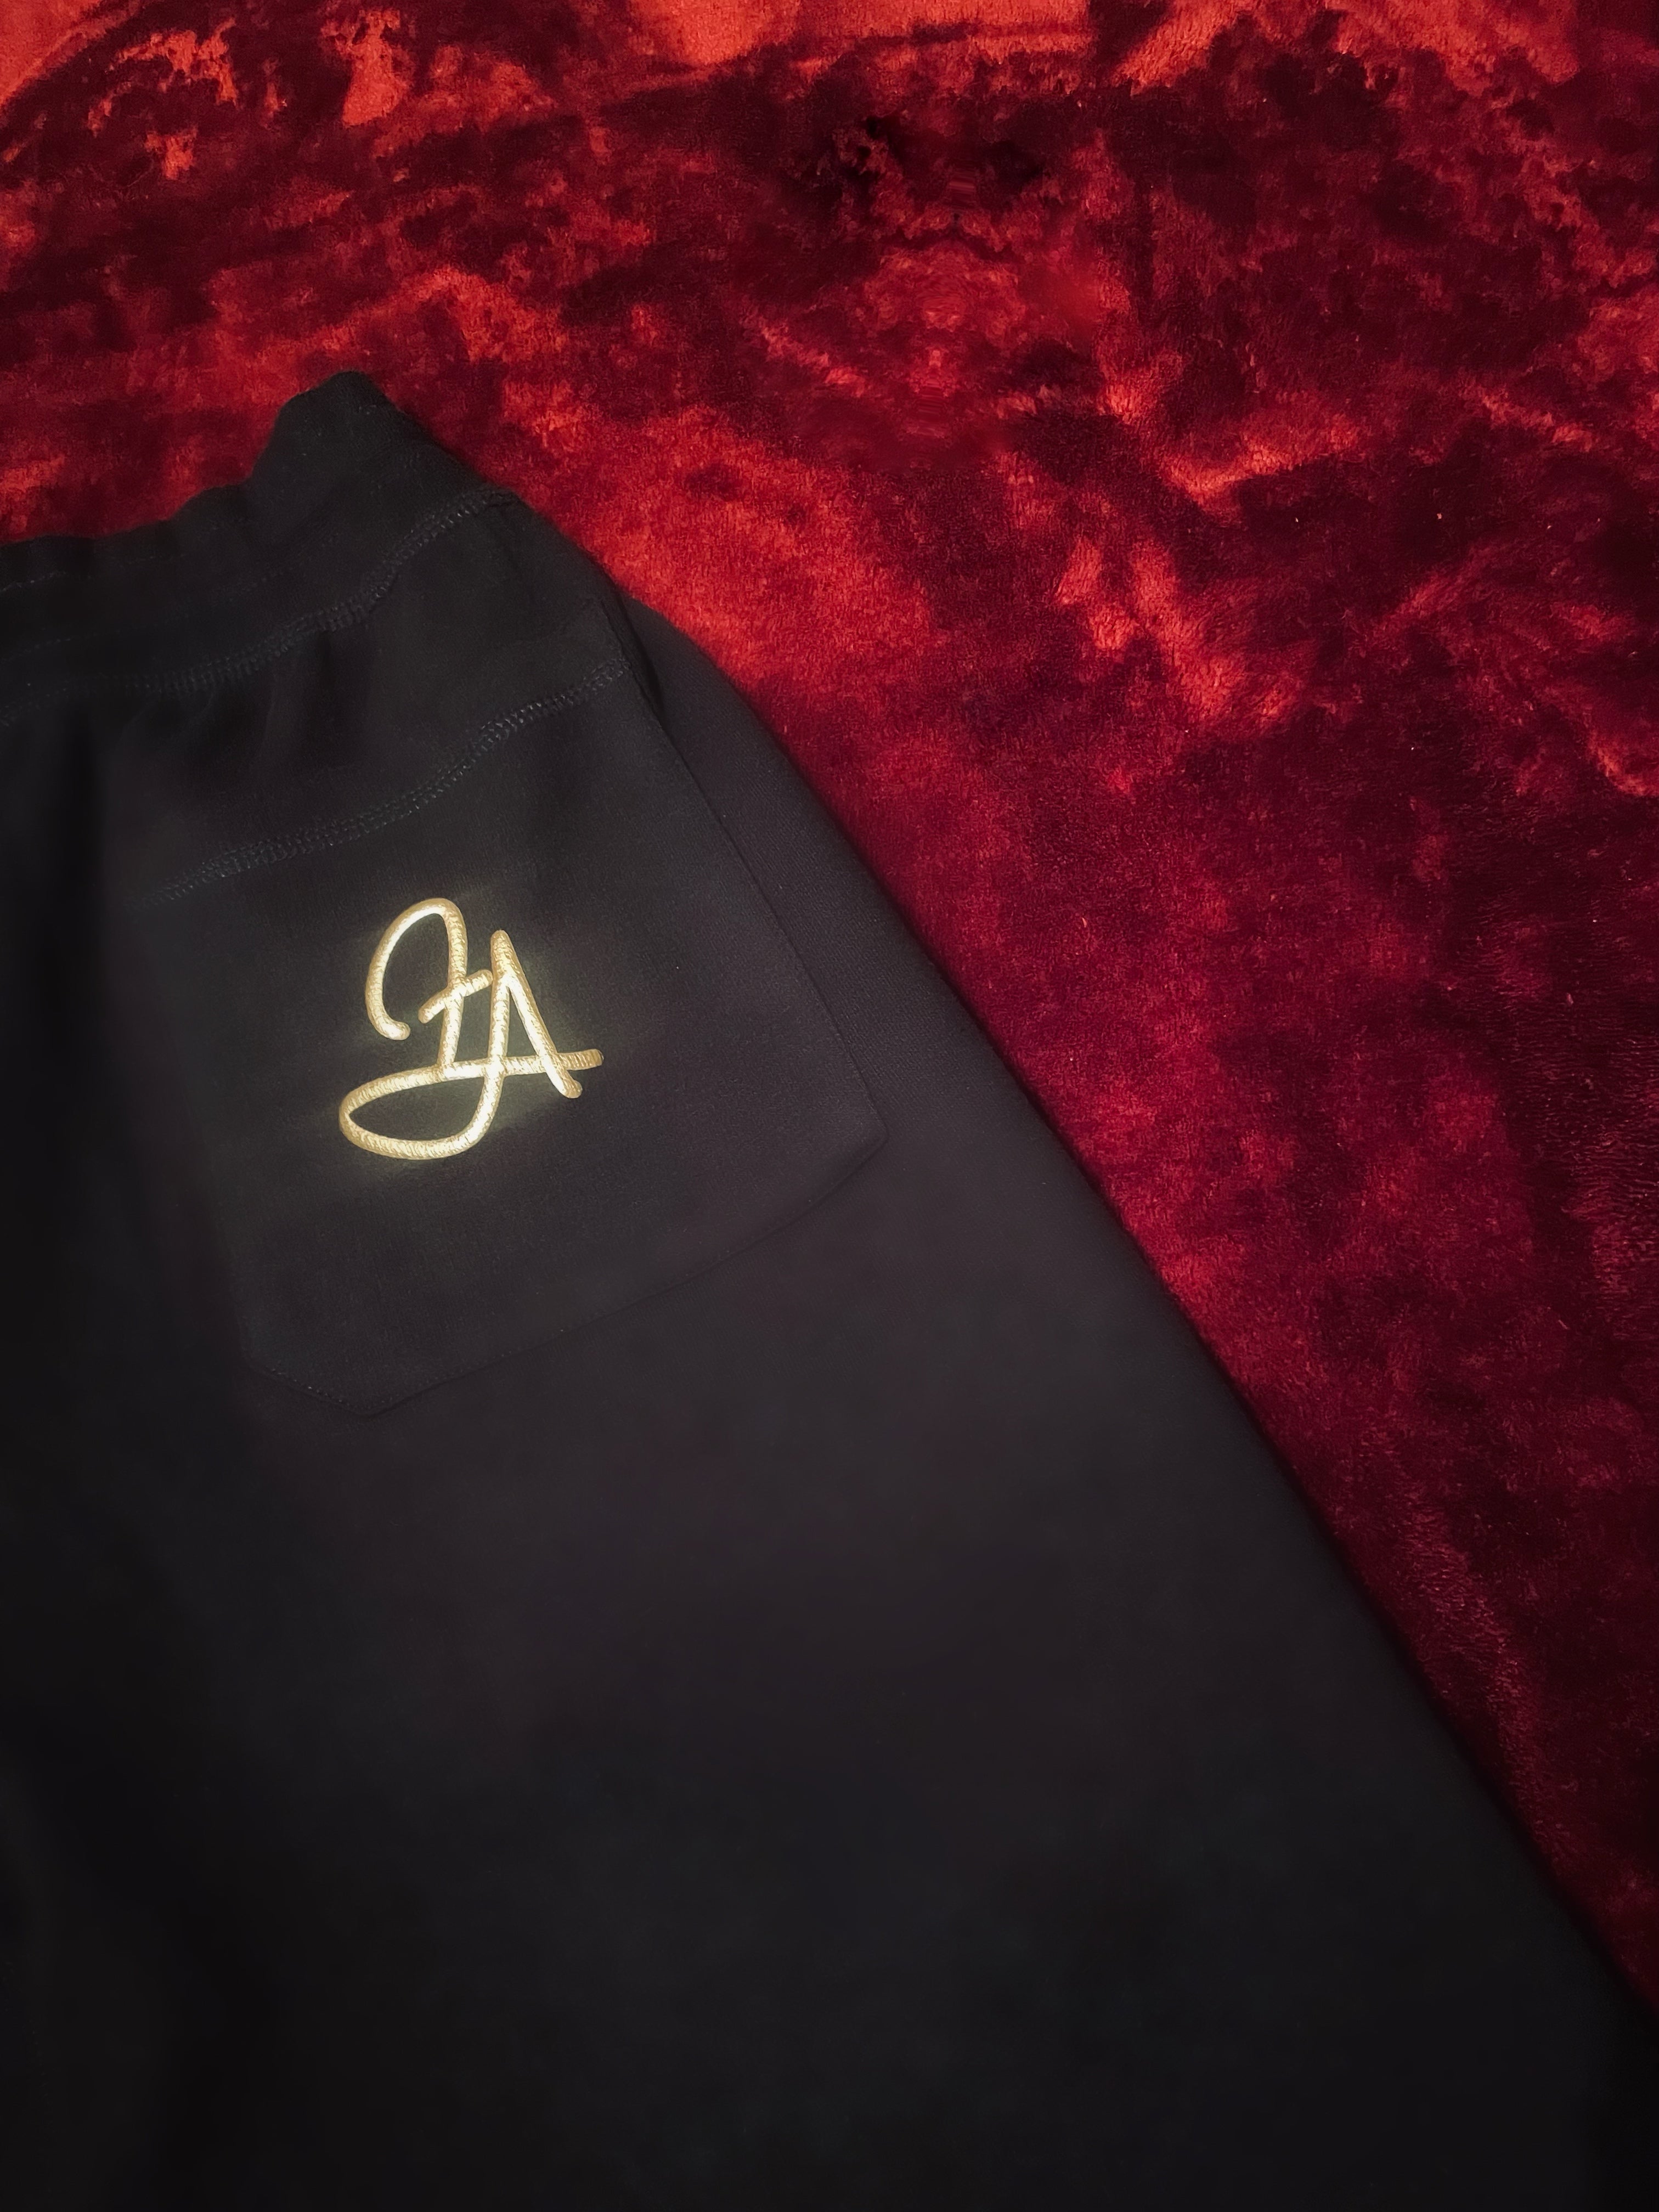 Fallon Aurielle Unisex Signature Beverly Hills T-Shirt (Black & Gold)